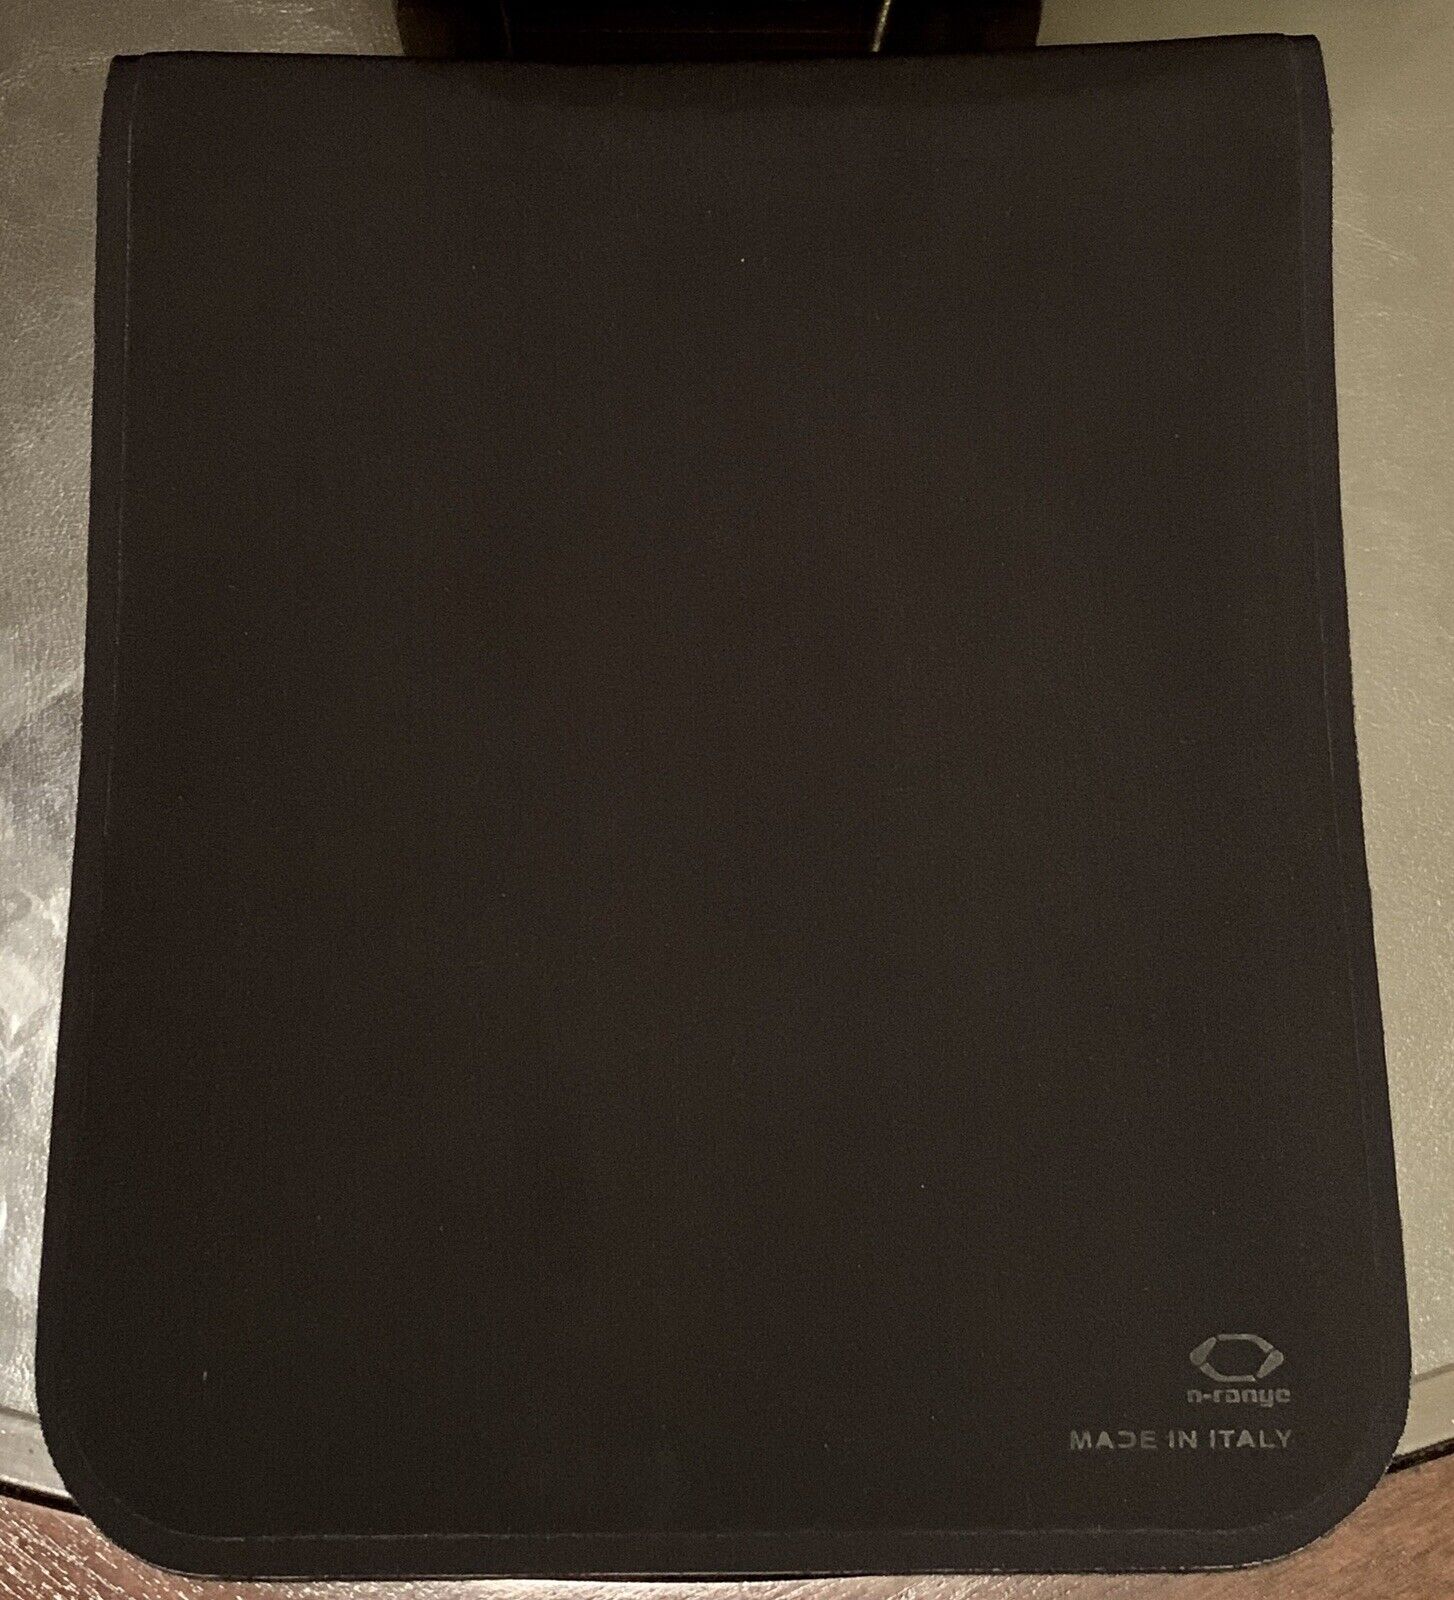 Ralph Lauren RLX Scuba n-range Ipad Case Polo Black Made In Italy Brand New